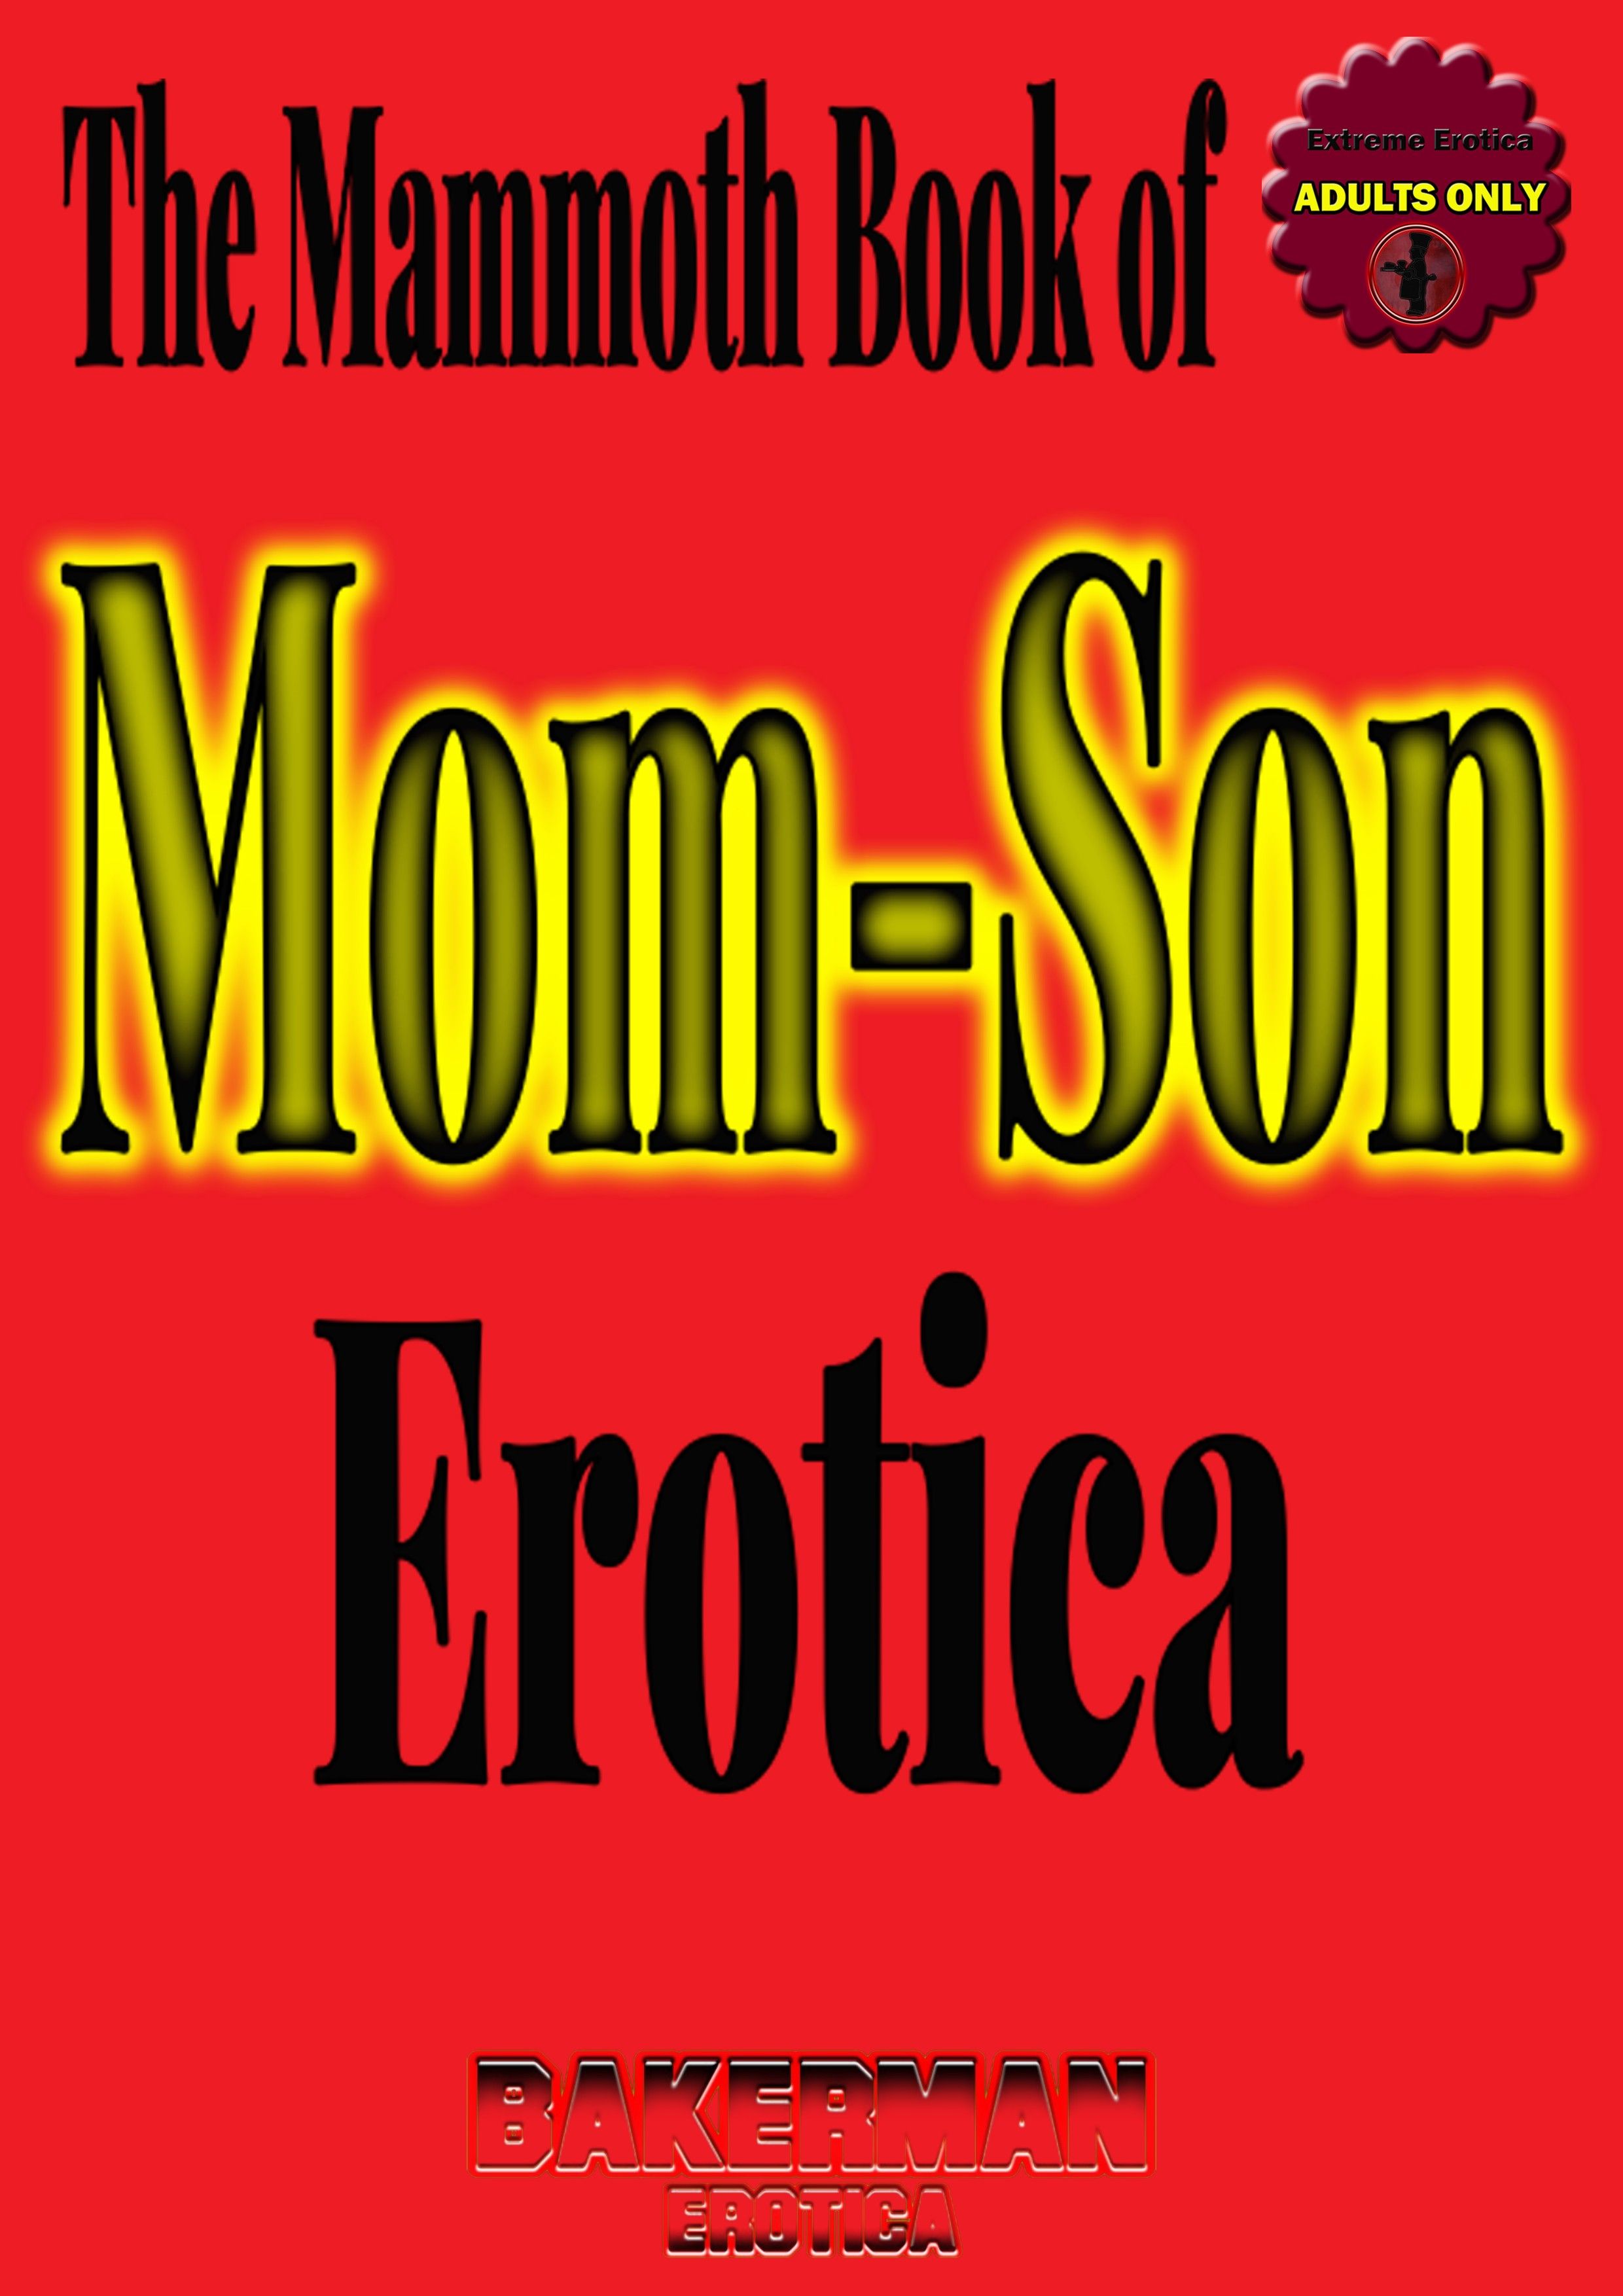 Mom son story erotic